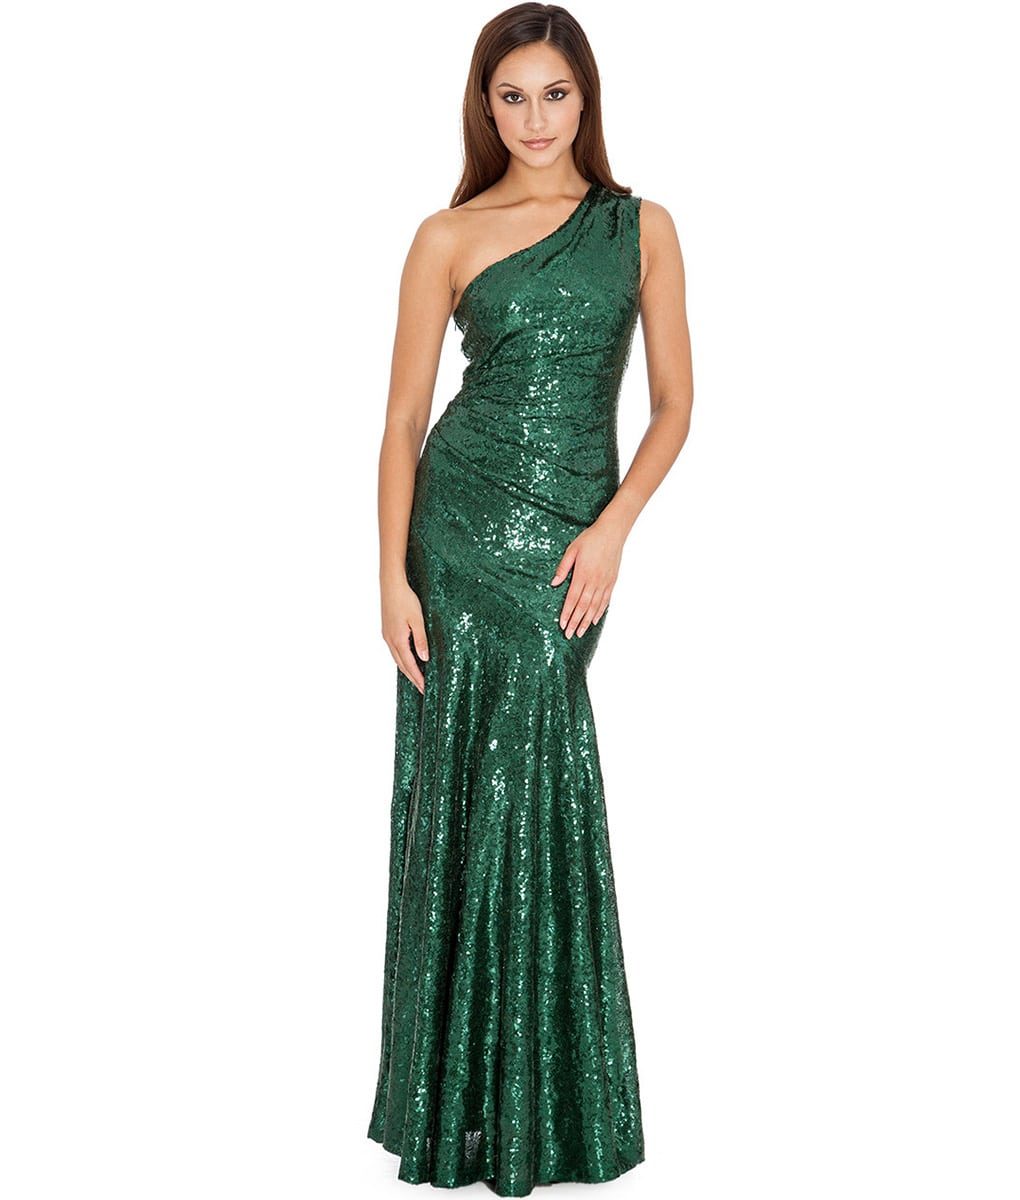 City Goddess - Emerald Green One-Shoulder Sequins Gown